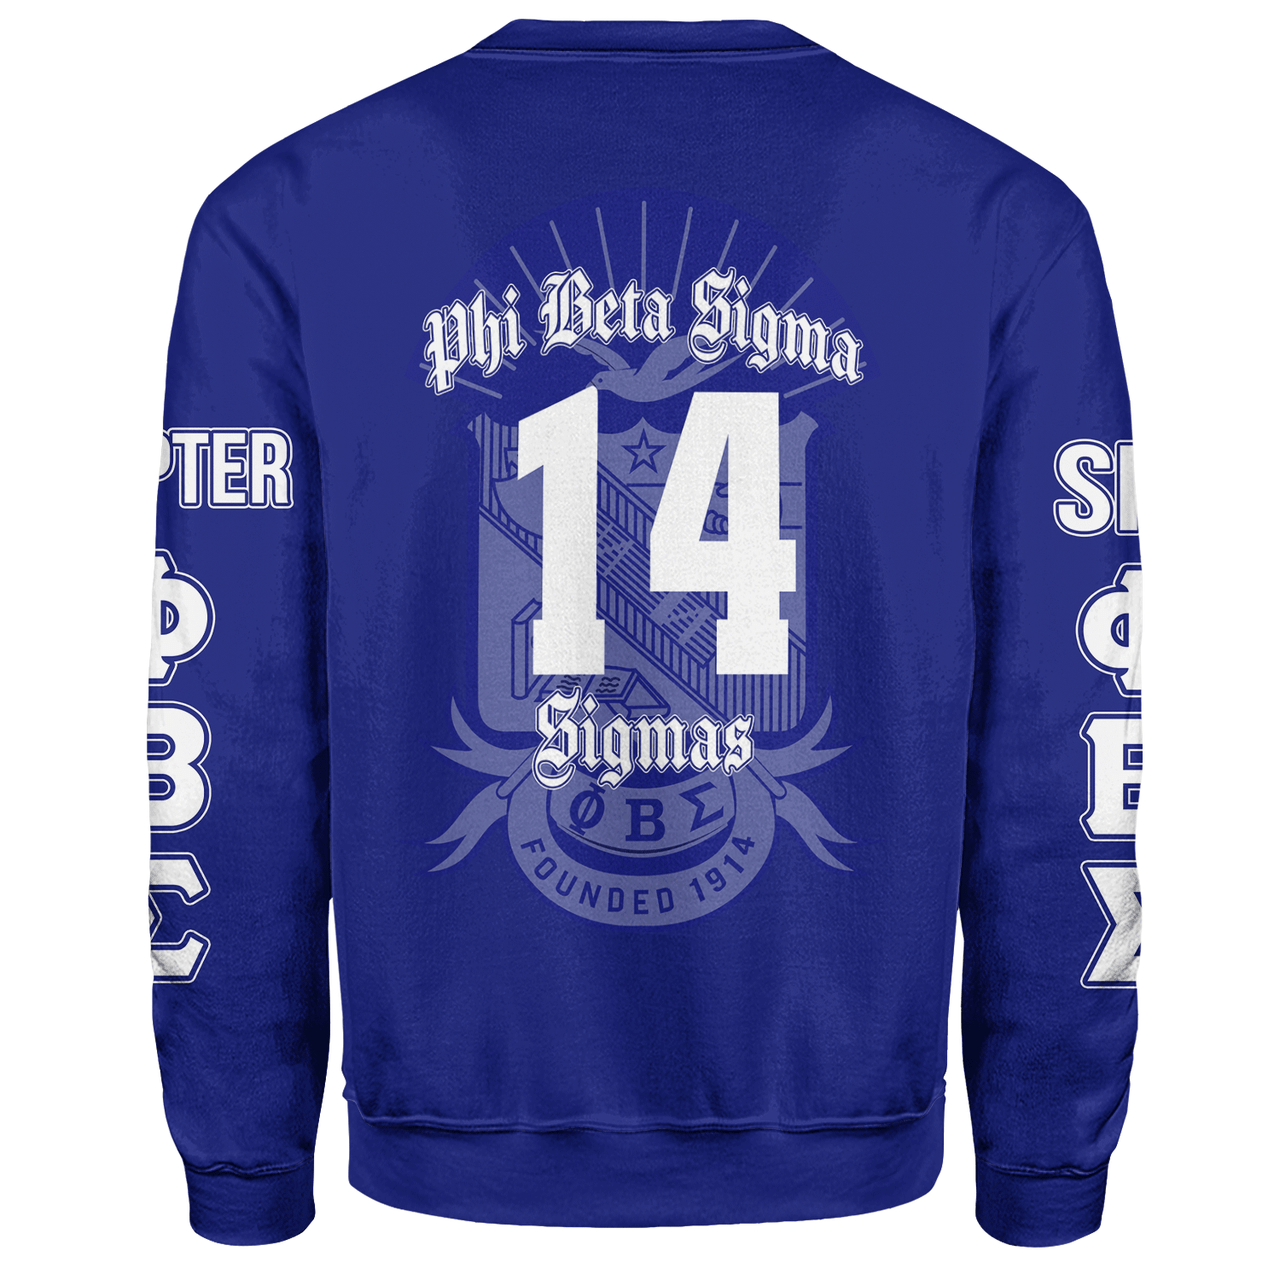 Phi Beta Sigma Sweatshirt Custom Chapter And Spring Style